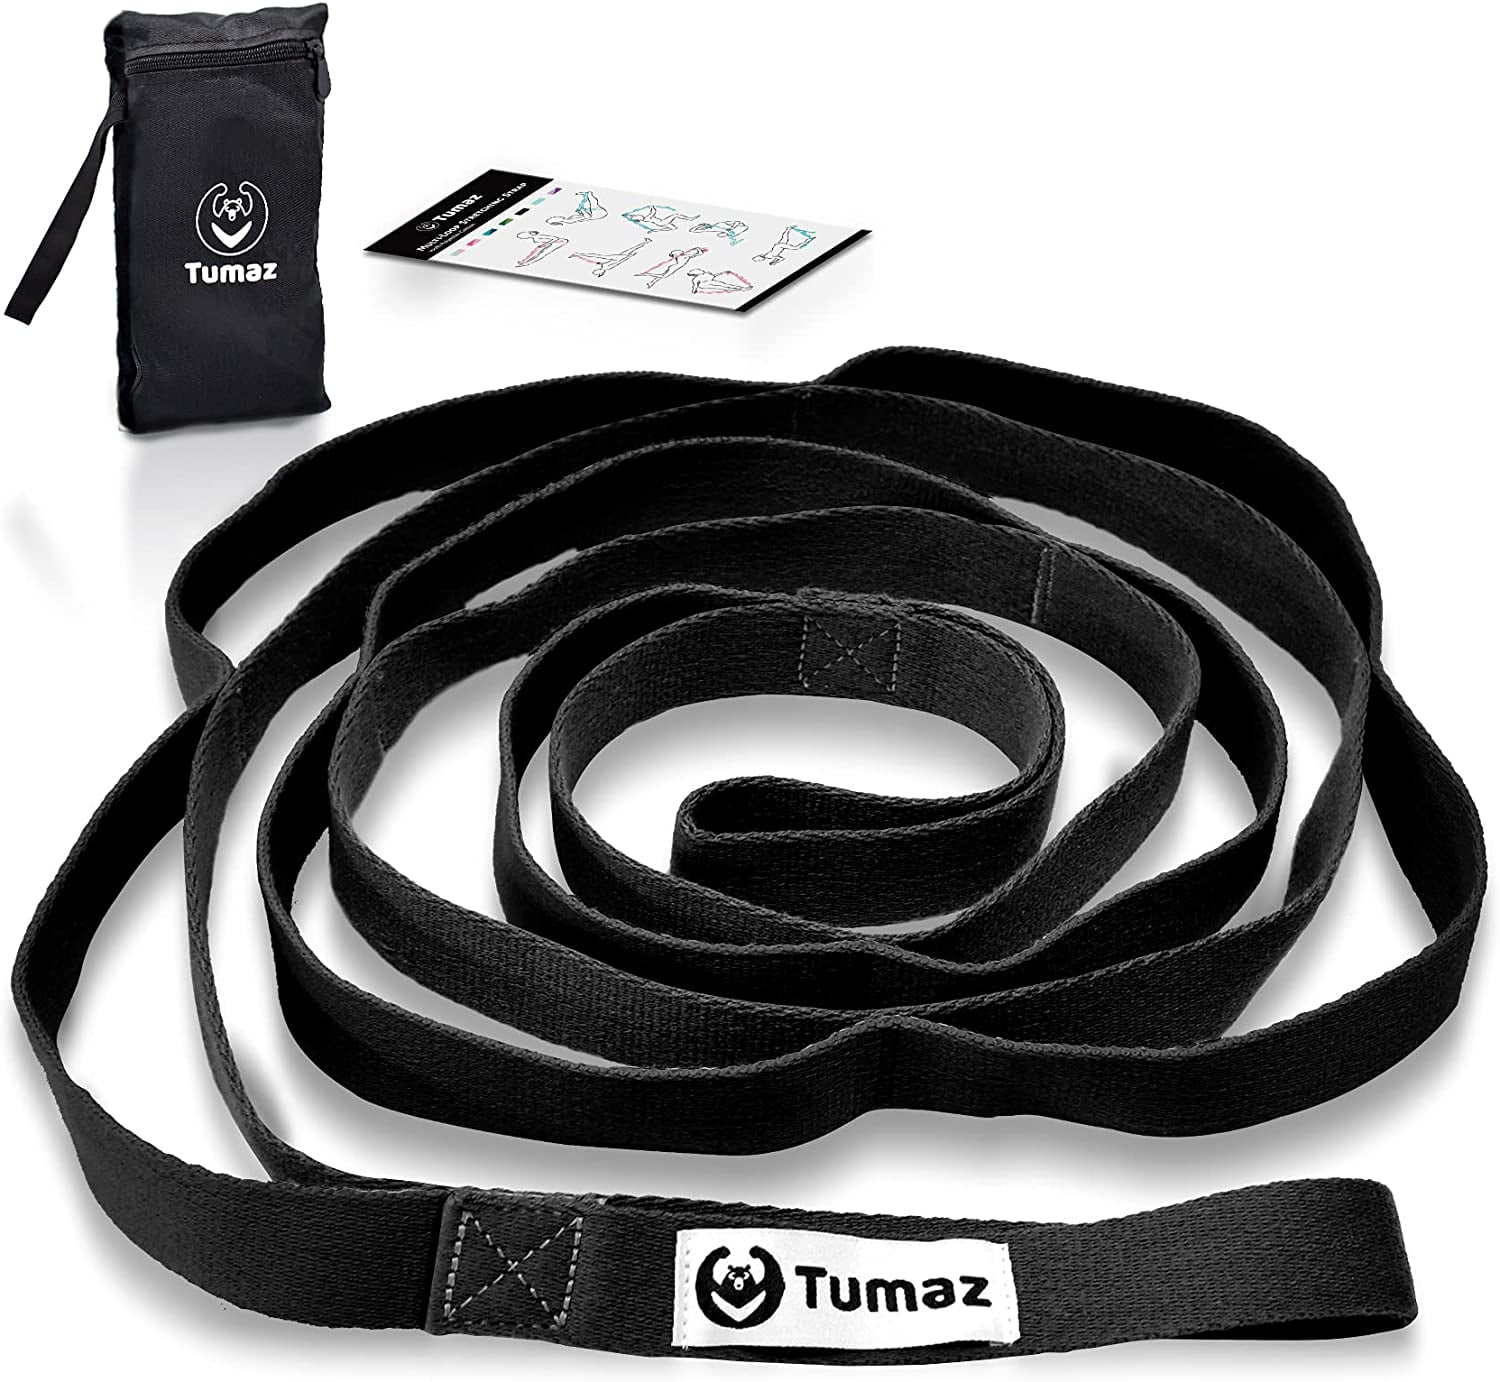 Tumaz Yoga Strap, Thick Soft 10 Loops & Non-Elastic Stretching Strap, 80  inch, Blue 